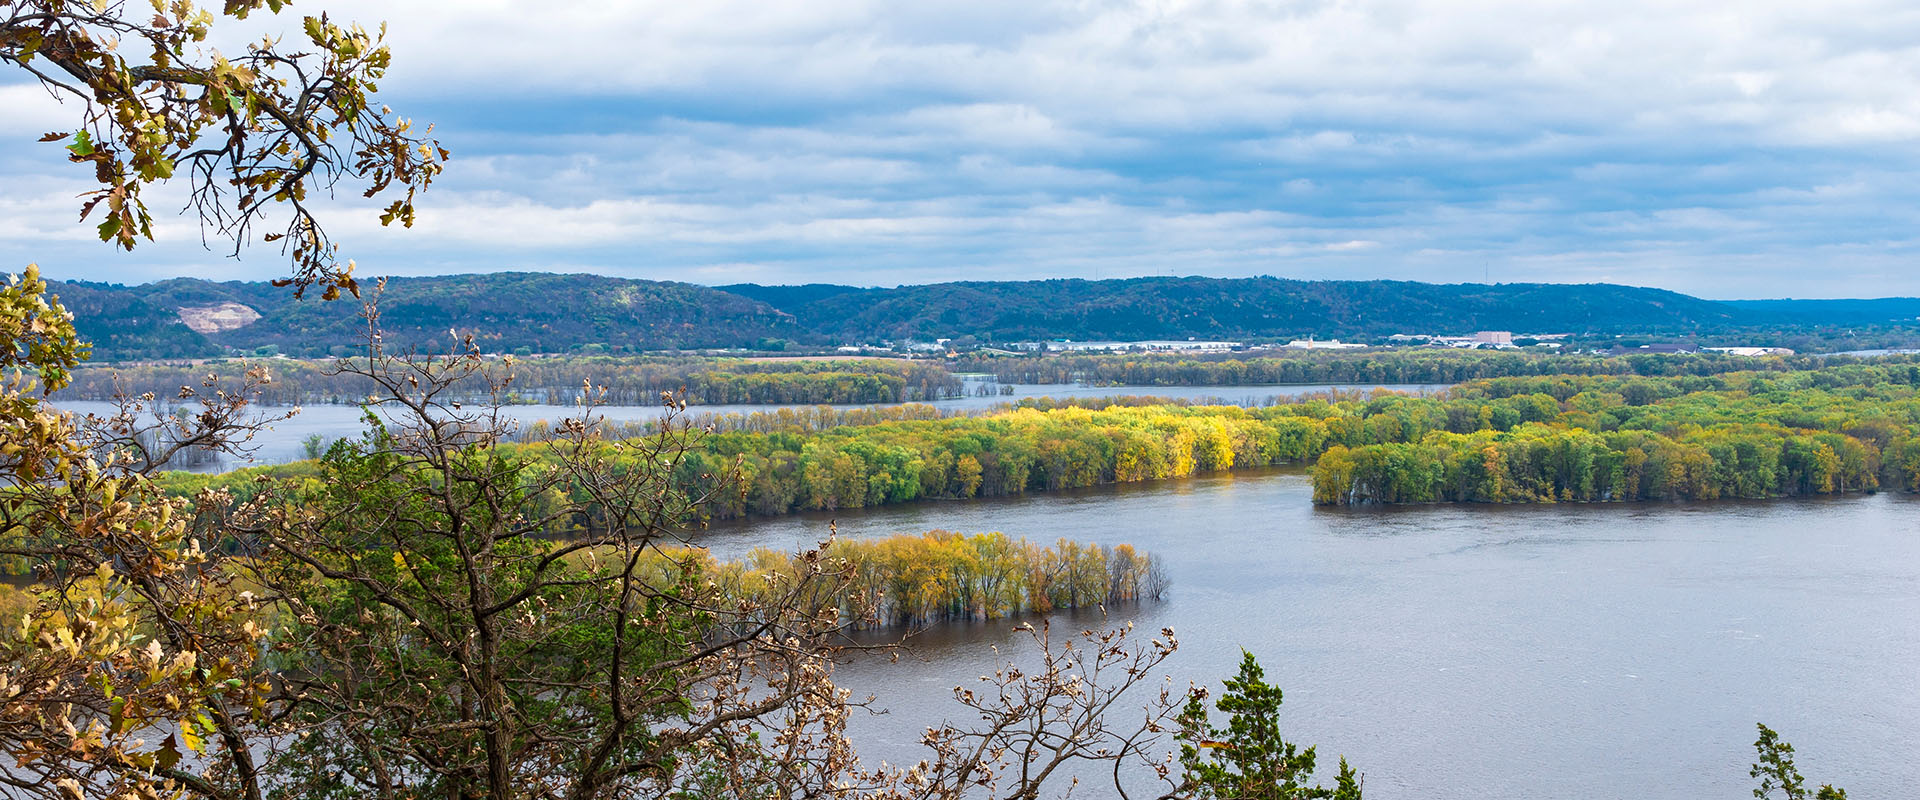 A Wisconsin river landscape